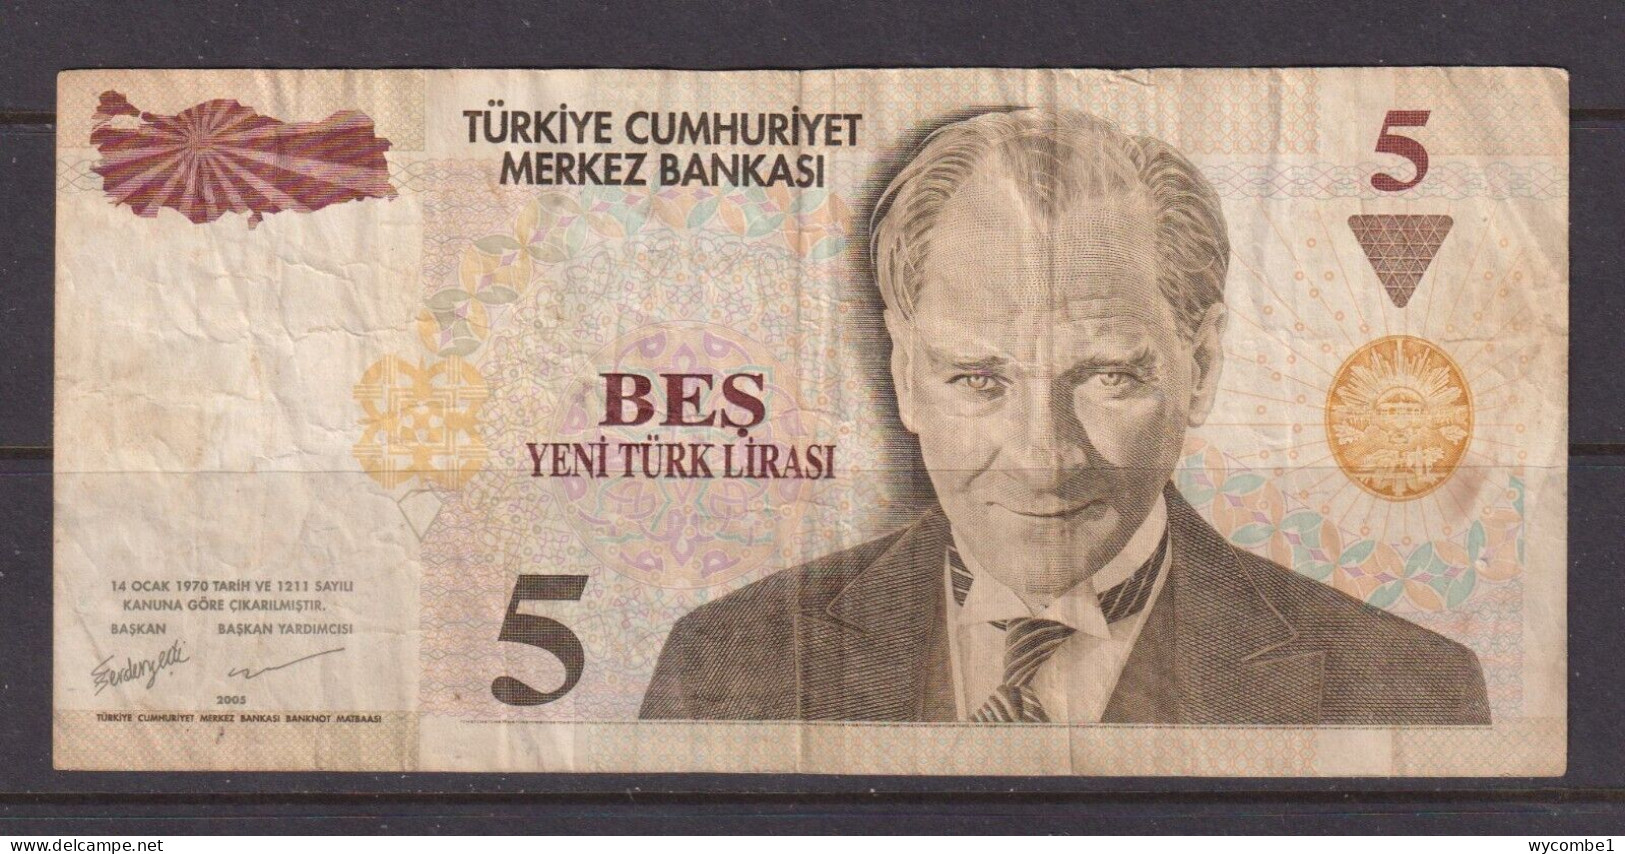 TURKEY - 2005 5 Lirasi Circulated Banknote As Scans - Turkey